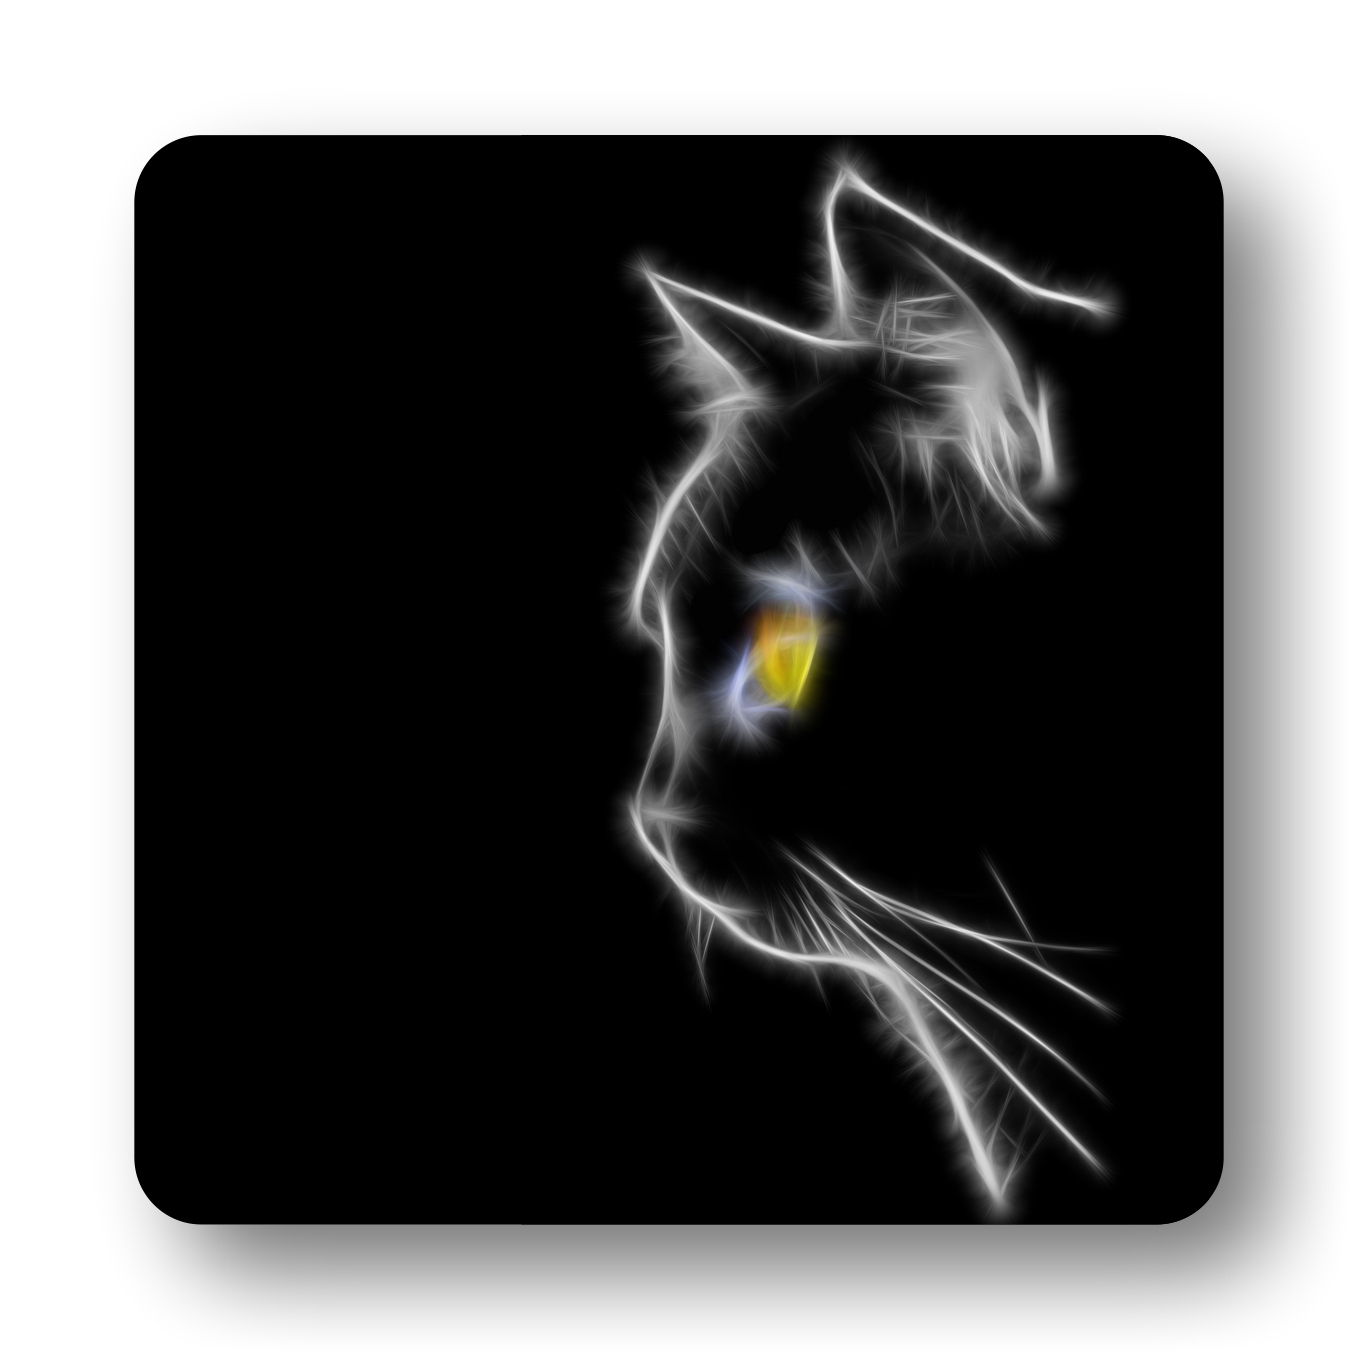 Profile of Yellow Eye Black Cat Coaster